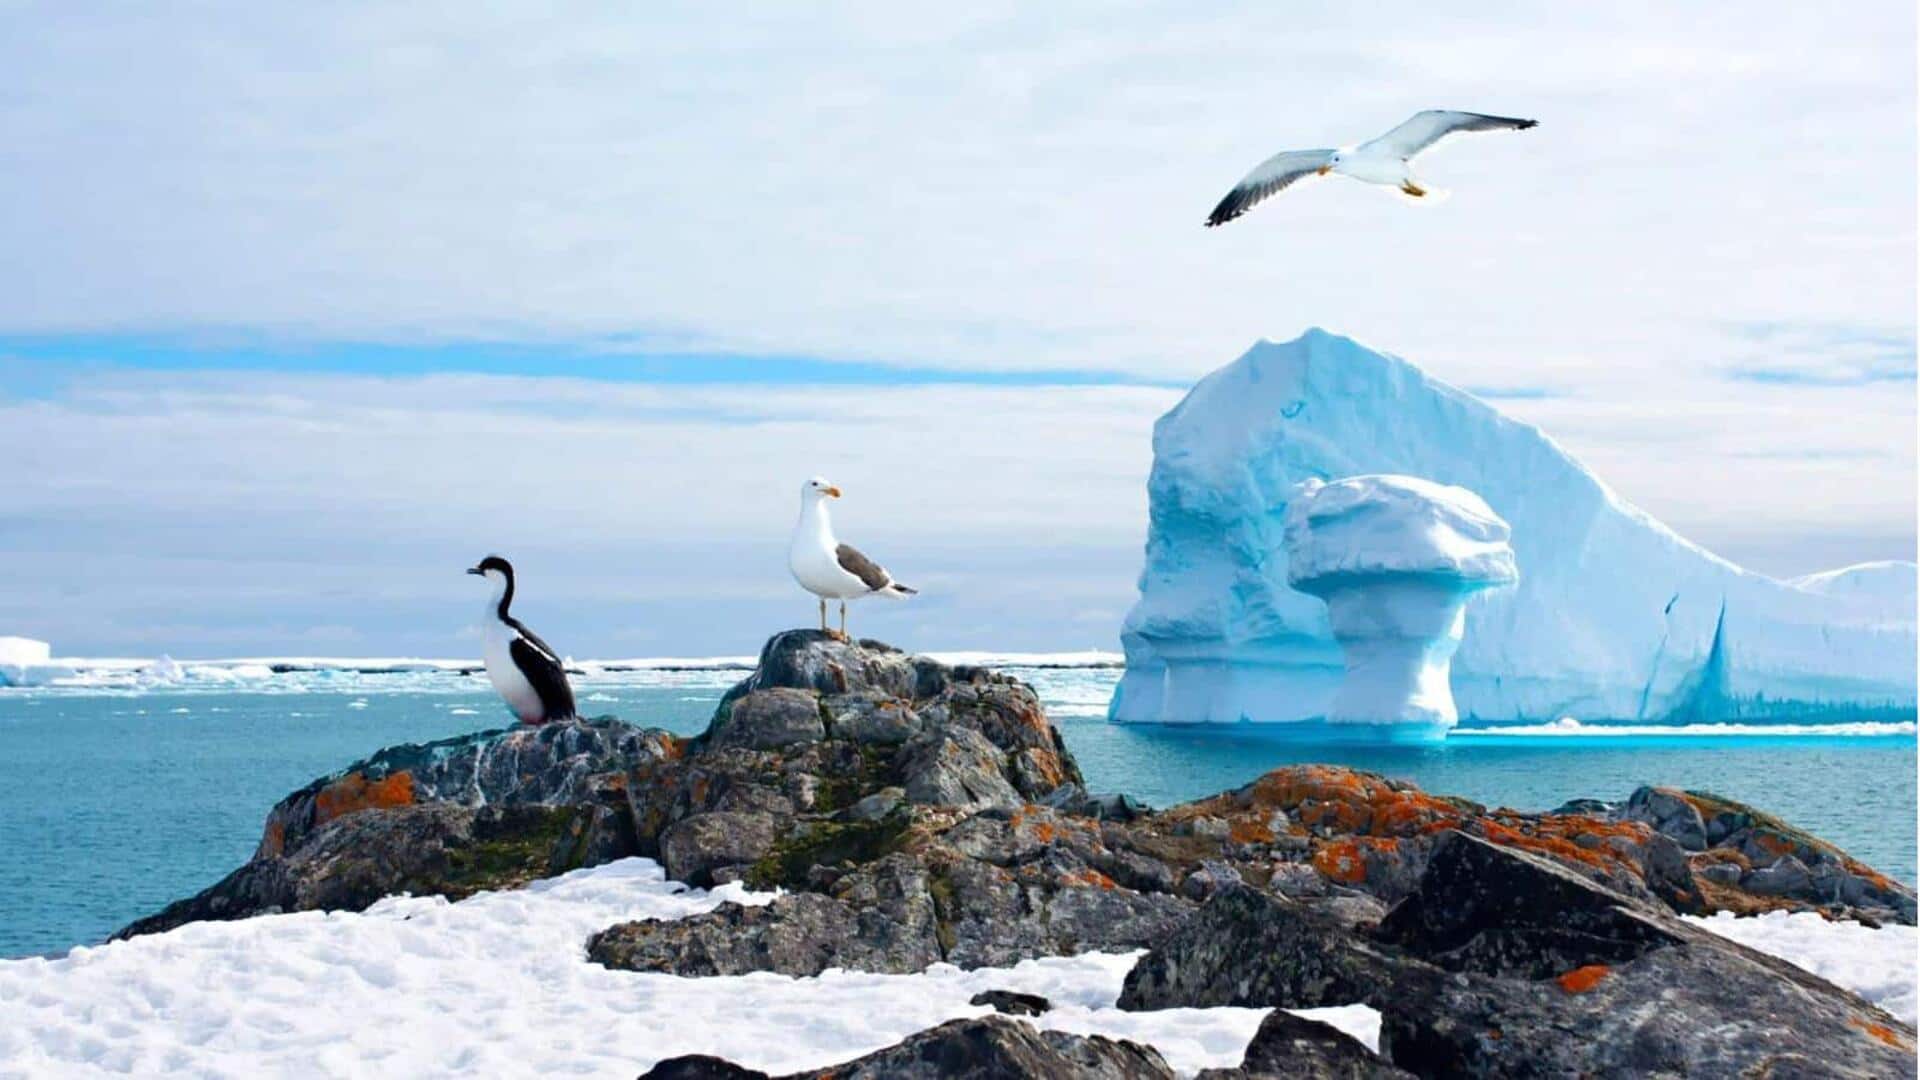 Pelayaran ekspedisi Antartika: Jelajahi gletser dan belantara yang luas 